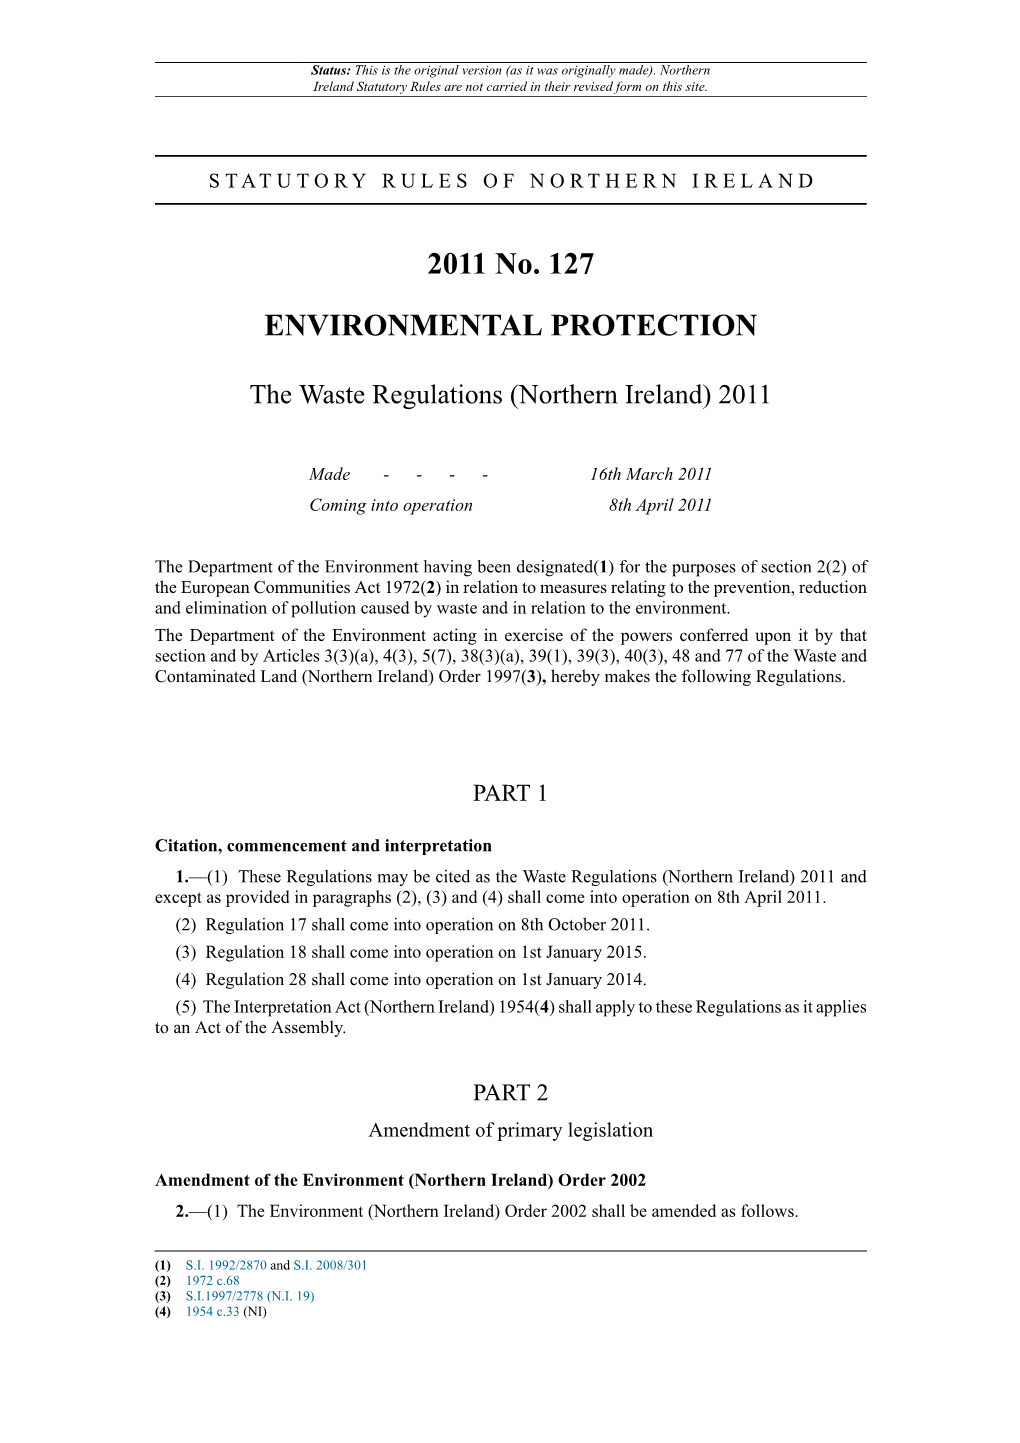 Waste Regulations (Northern Ireland) 2011